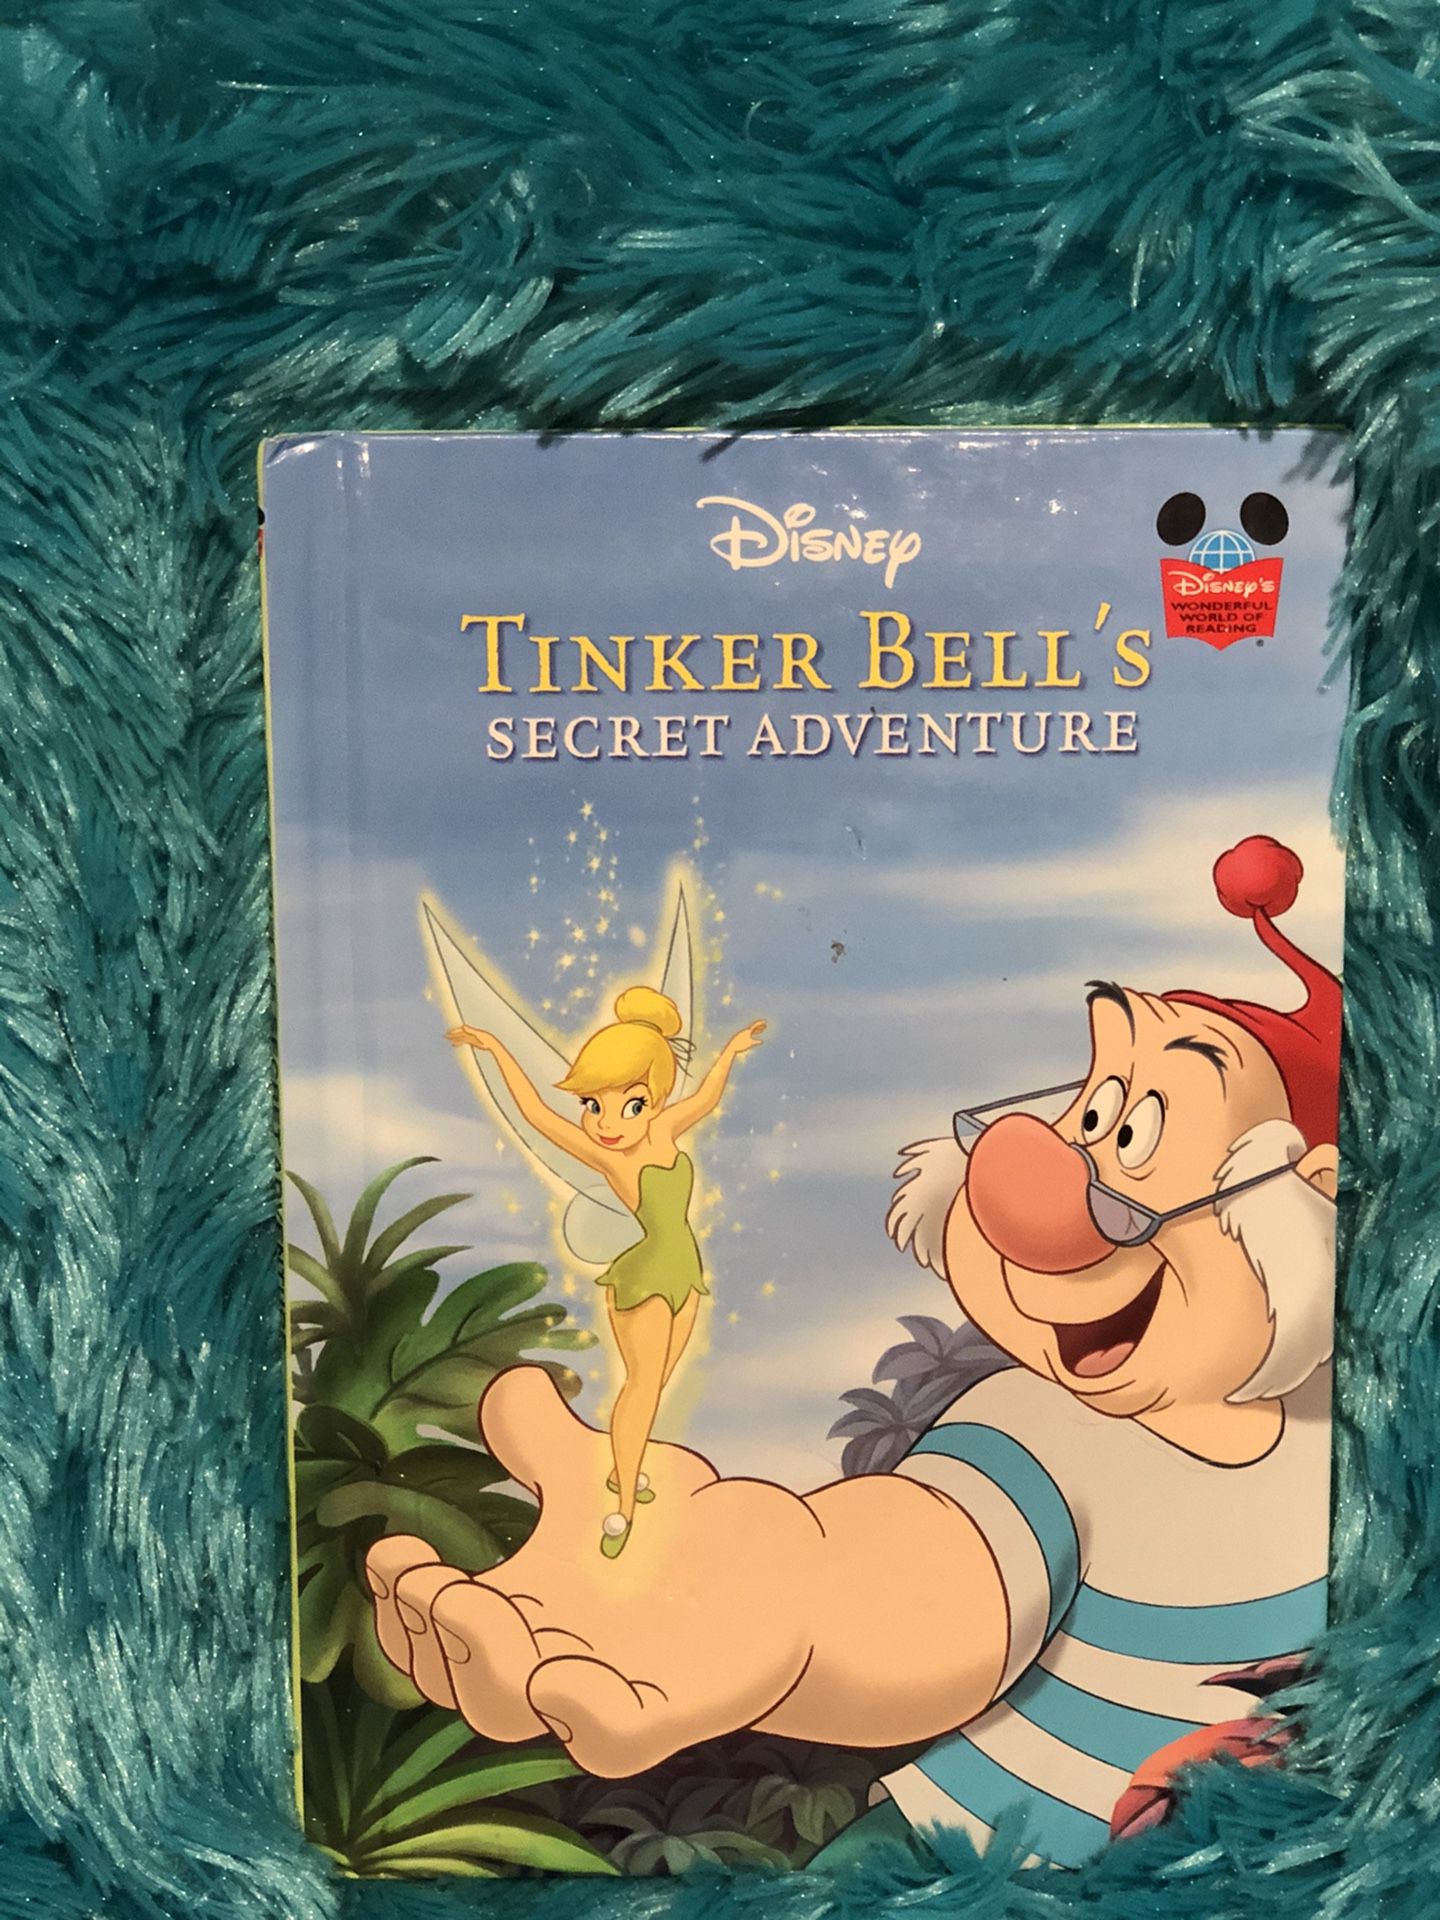 Tinkerbell’s secret adventure with Peter Pan! Disney’s Wonderful World of Reading children’s book